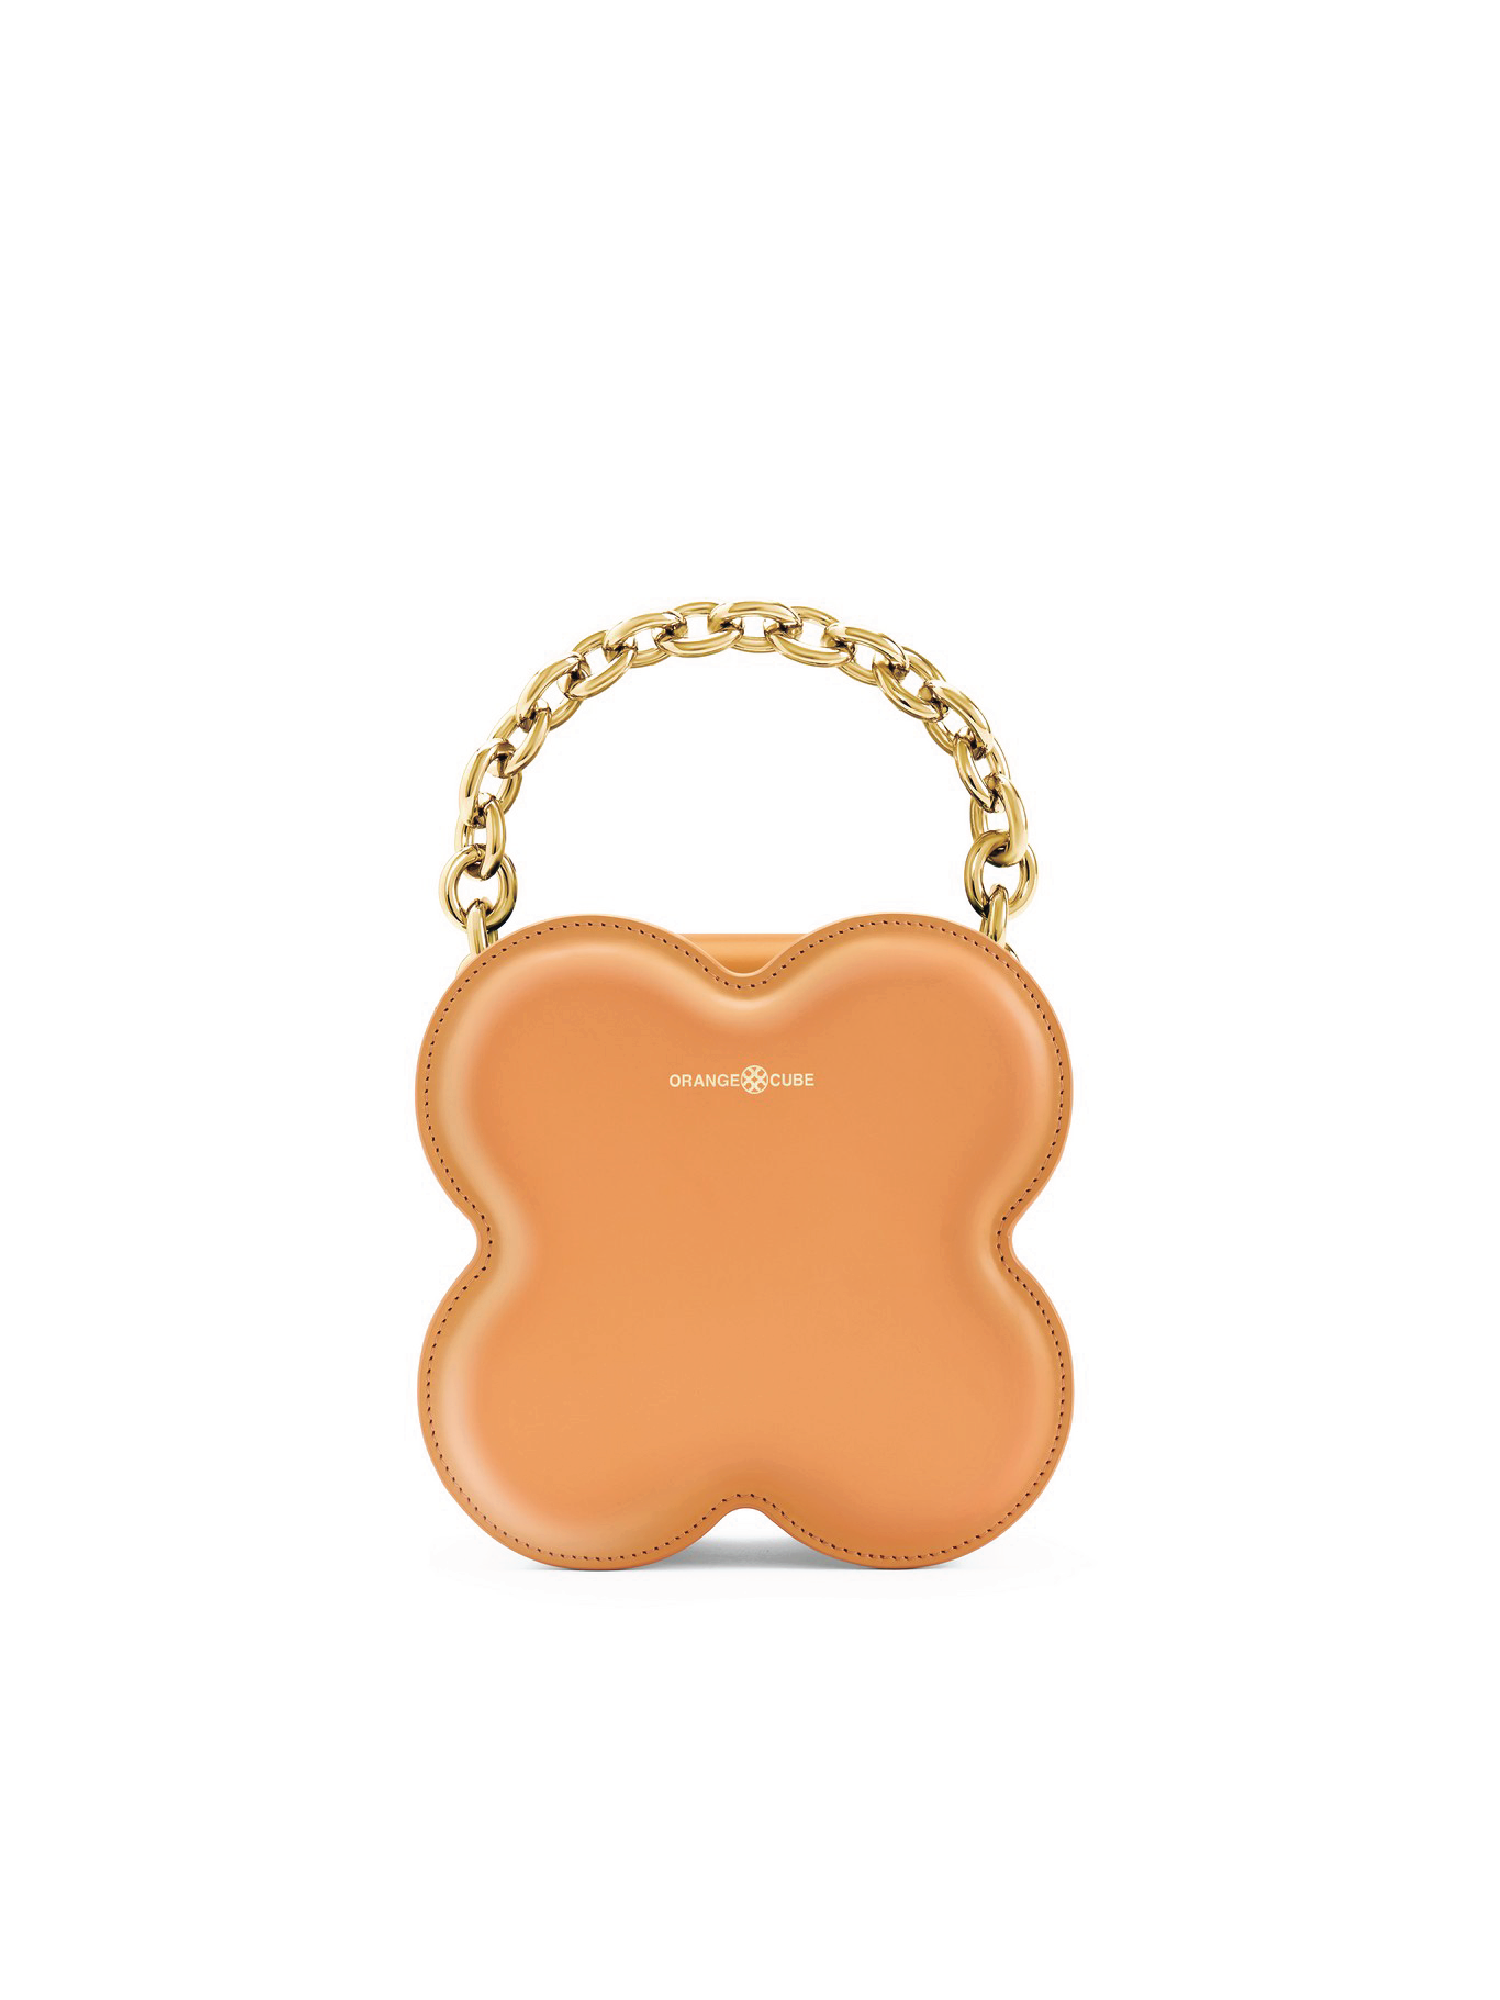 Lucky Clover Handbag - Orange (Large) - Orange Cube